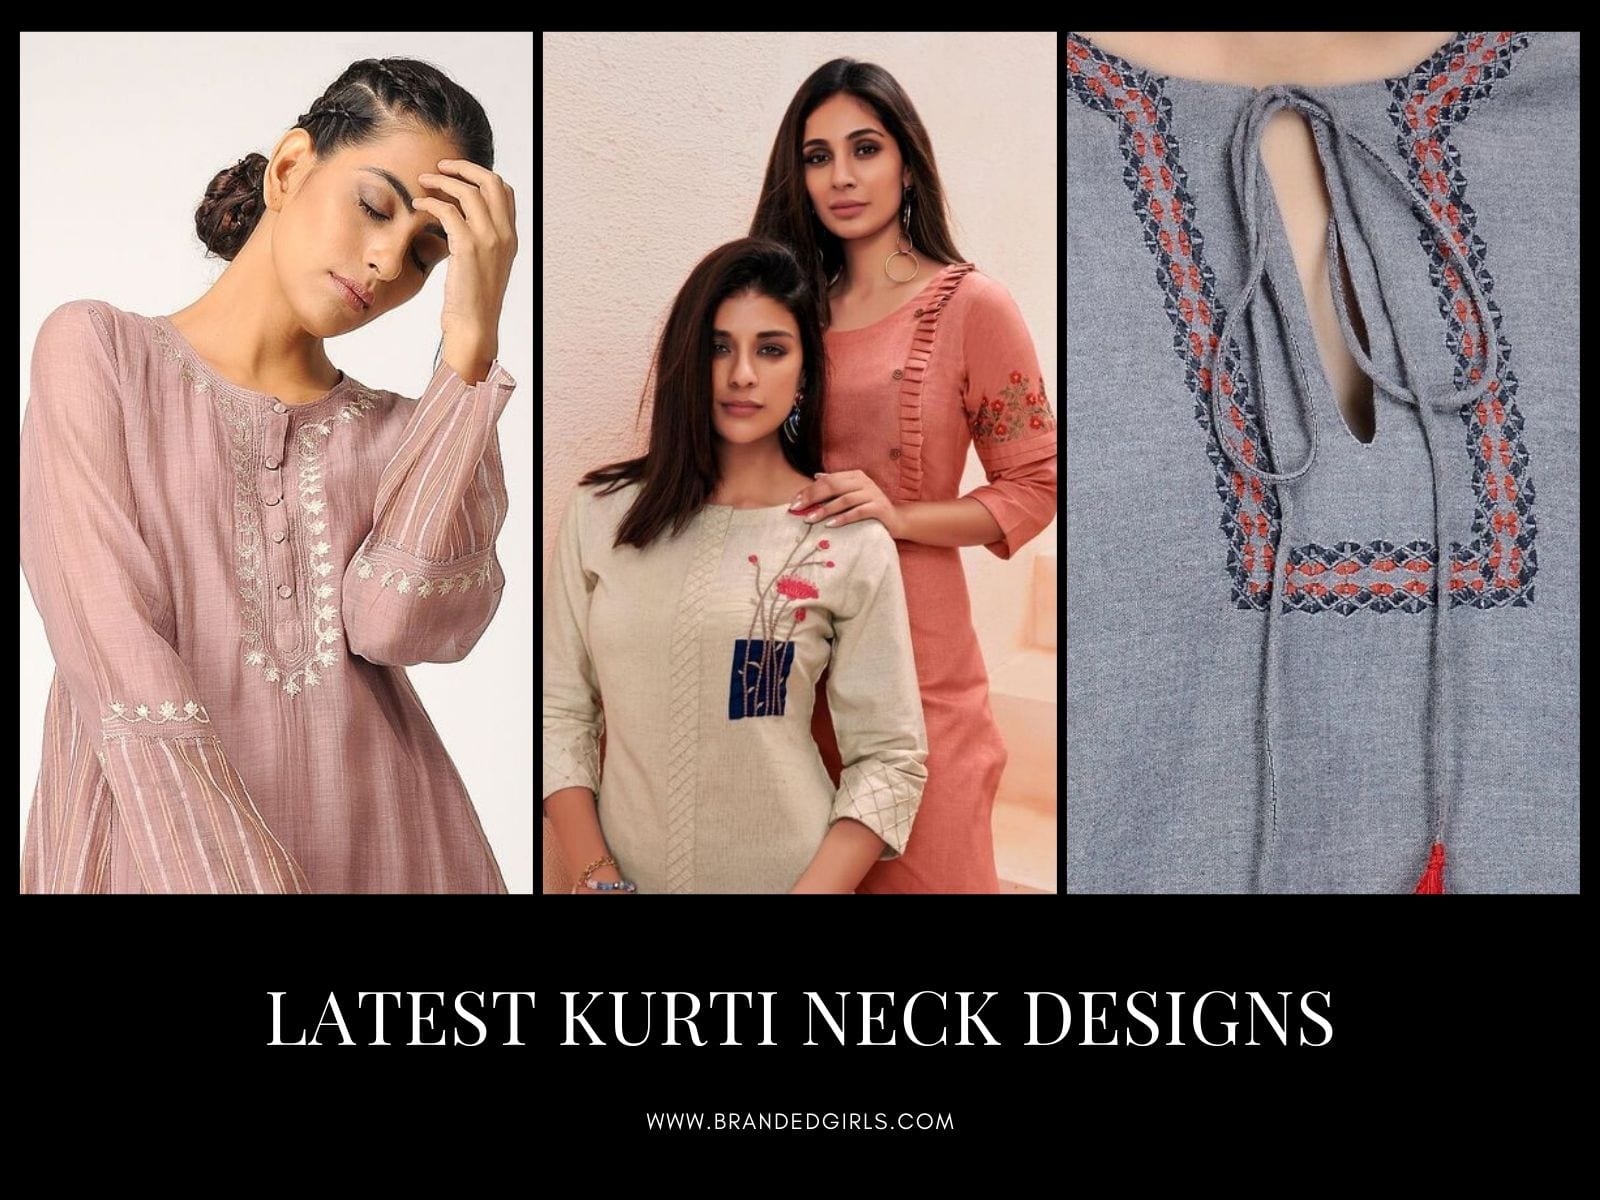 Kurti Neck Designs– 23 Latest Neck Styles for Women's Kurtas